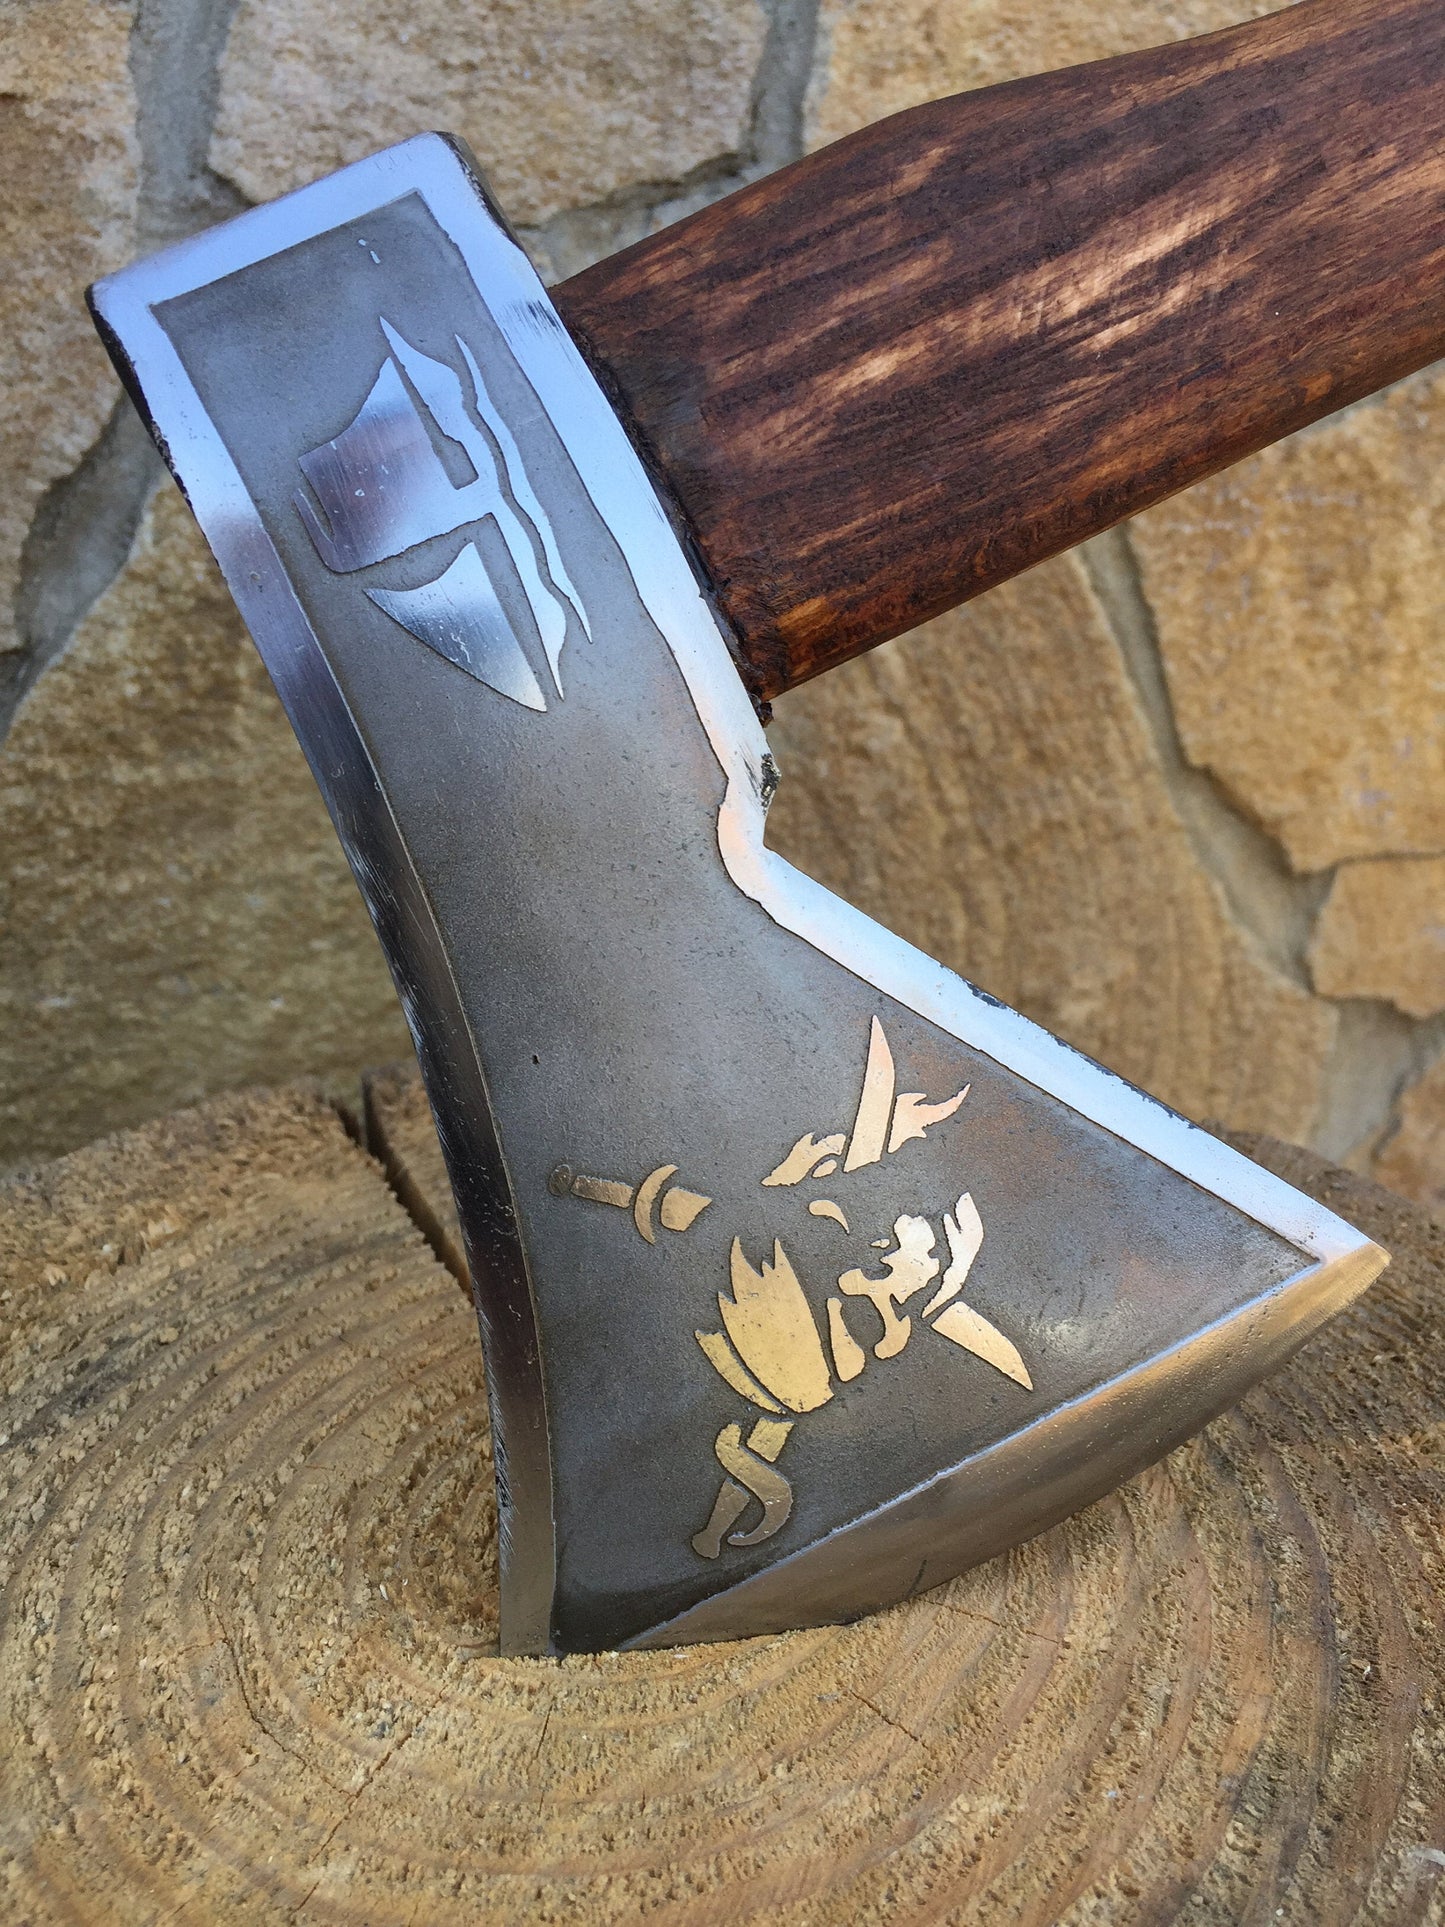 Viking axe, tomahawk, mens gifts, medieval axe, throwing axe, hatchet, scandinavic axe, viking weaponry, viking gifts, pirate art, iron axe